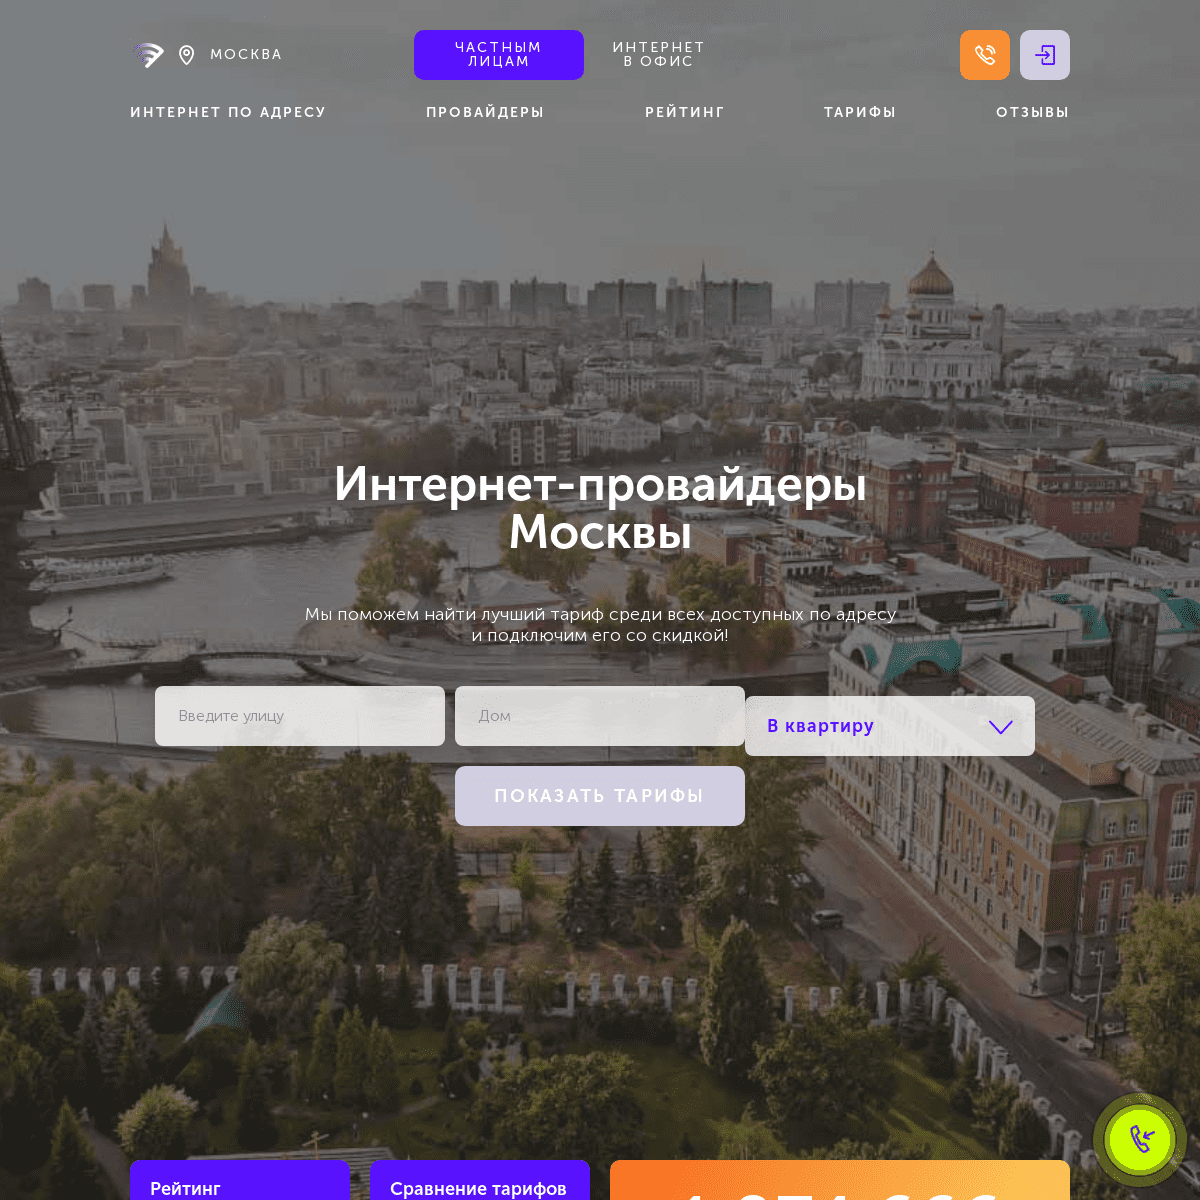 A complete backup of moskvaonline.ru